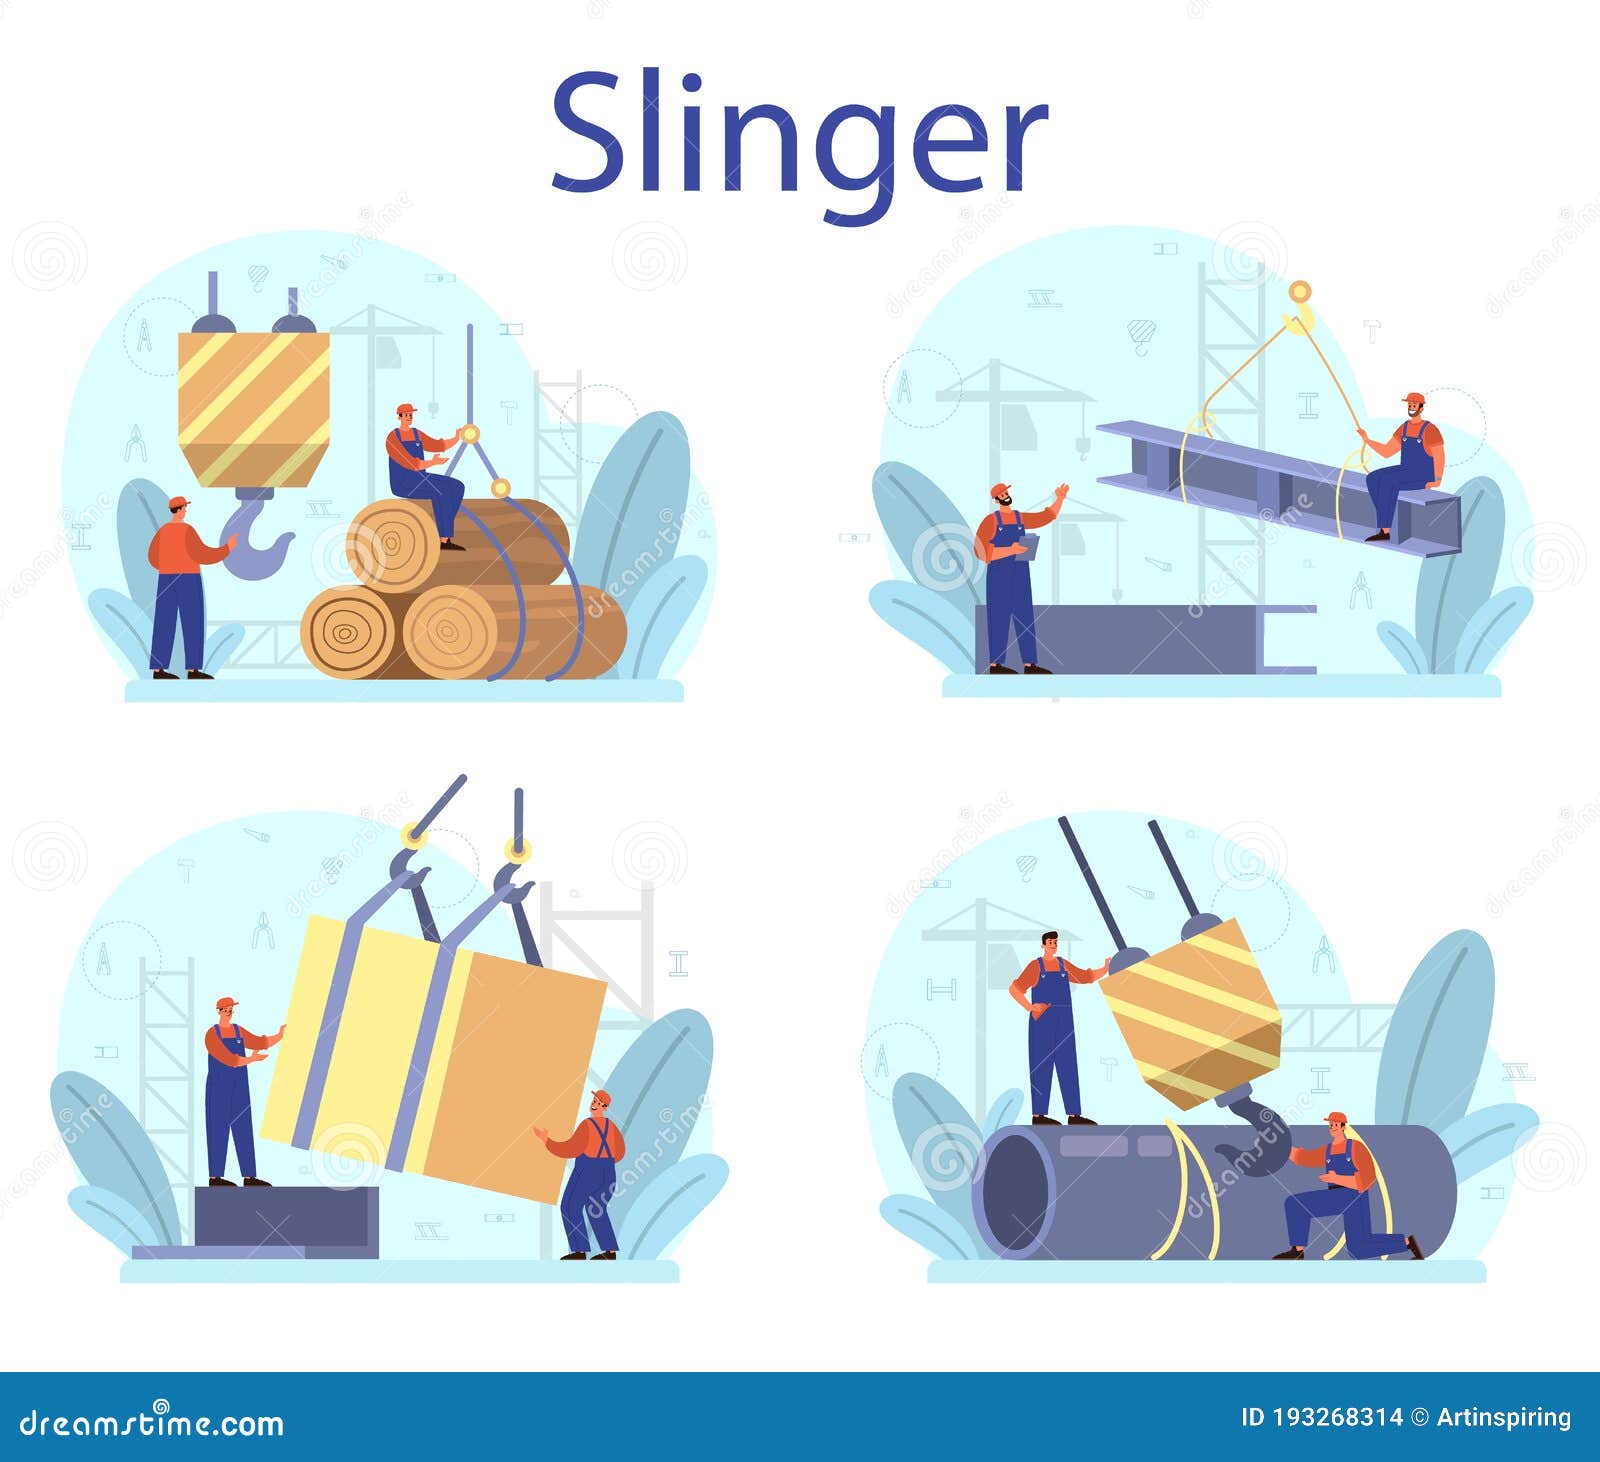 slinger set. professional workers of constructing industry slinging